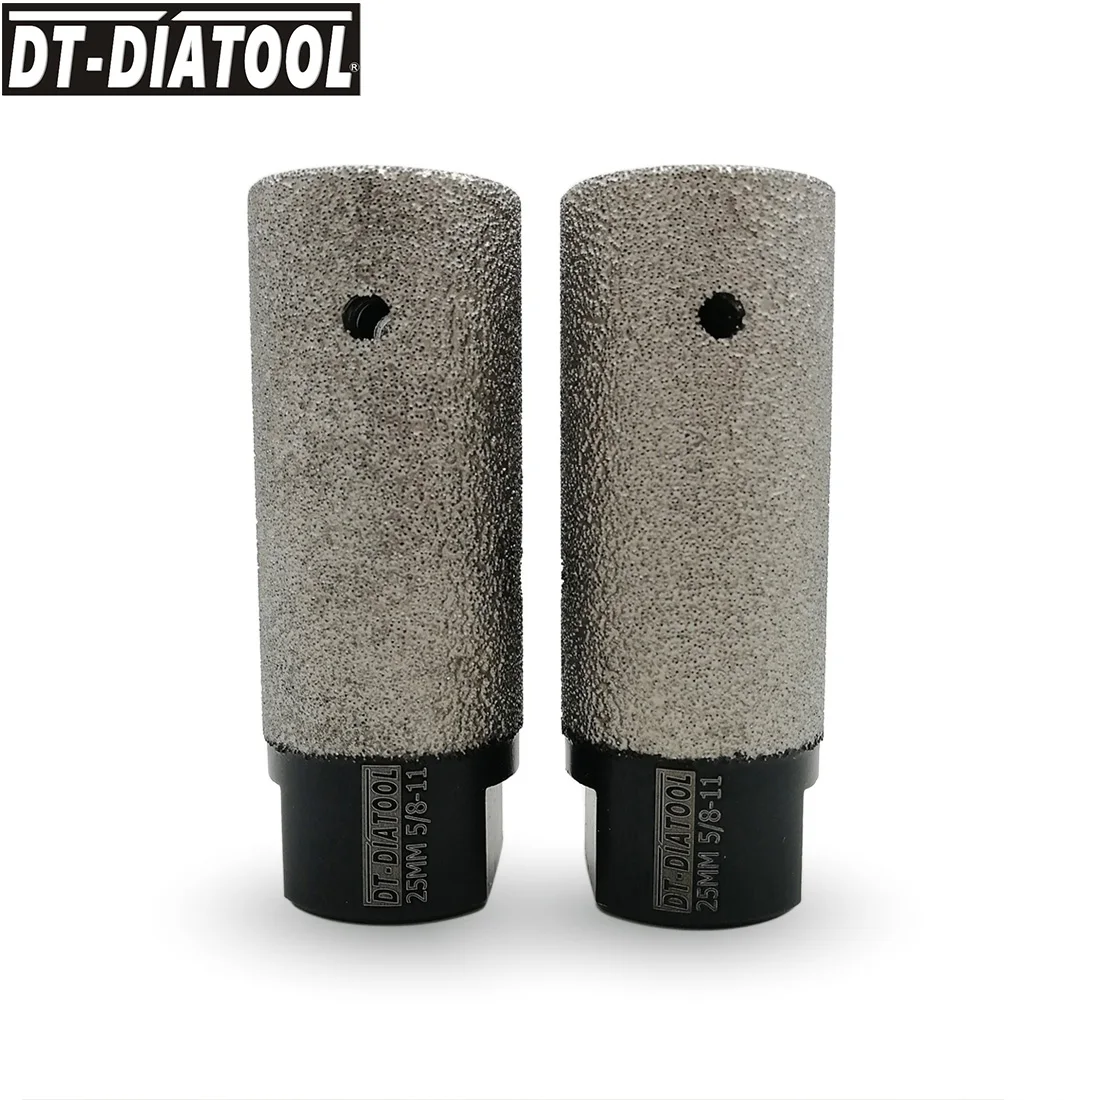 DT-DIATOOL 2pcs Dia 25mm 5/8-11 Vacuum Brazed Diamond Milling Finger Bits For Enlarge Holes In Porcelain Ceramic Marble Granite